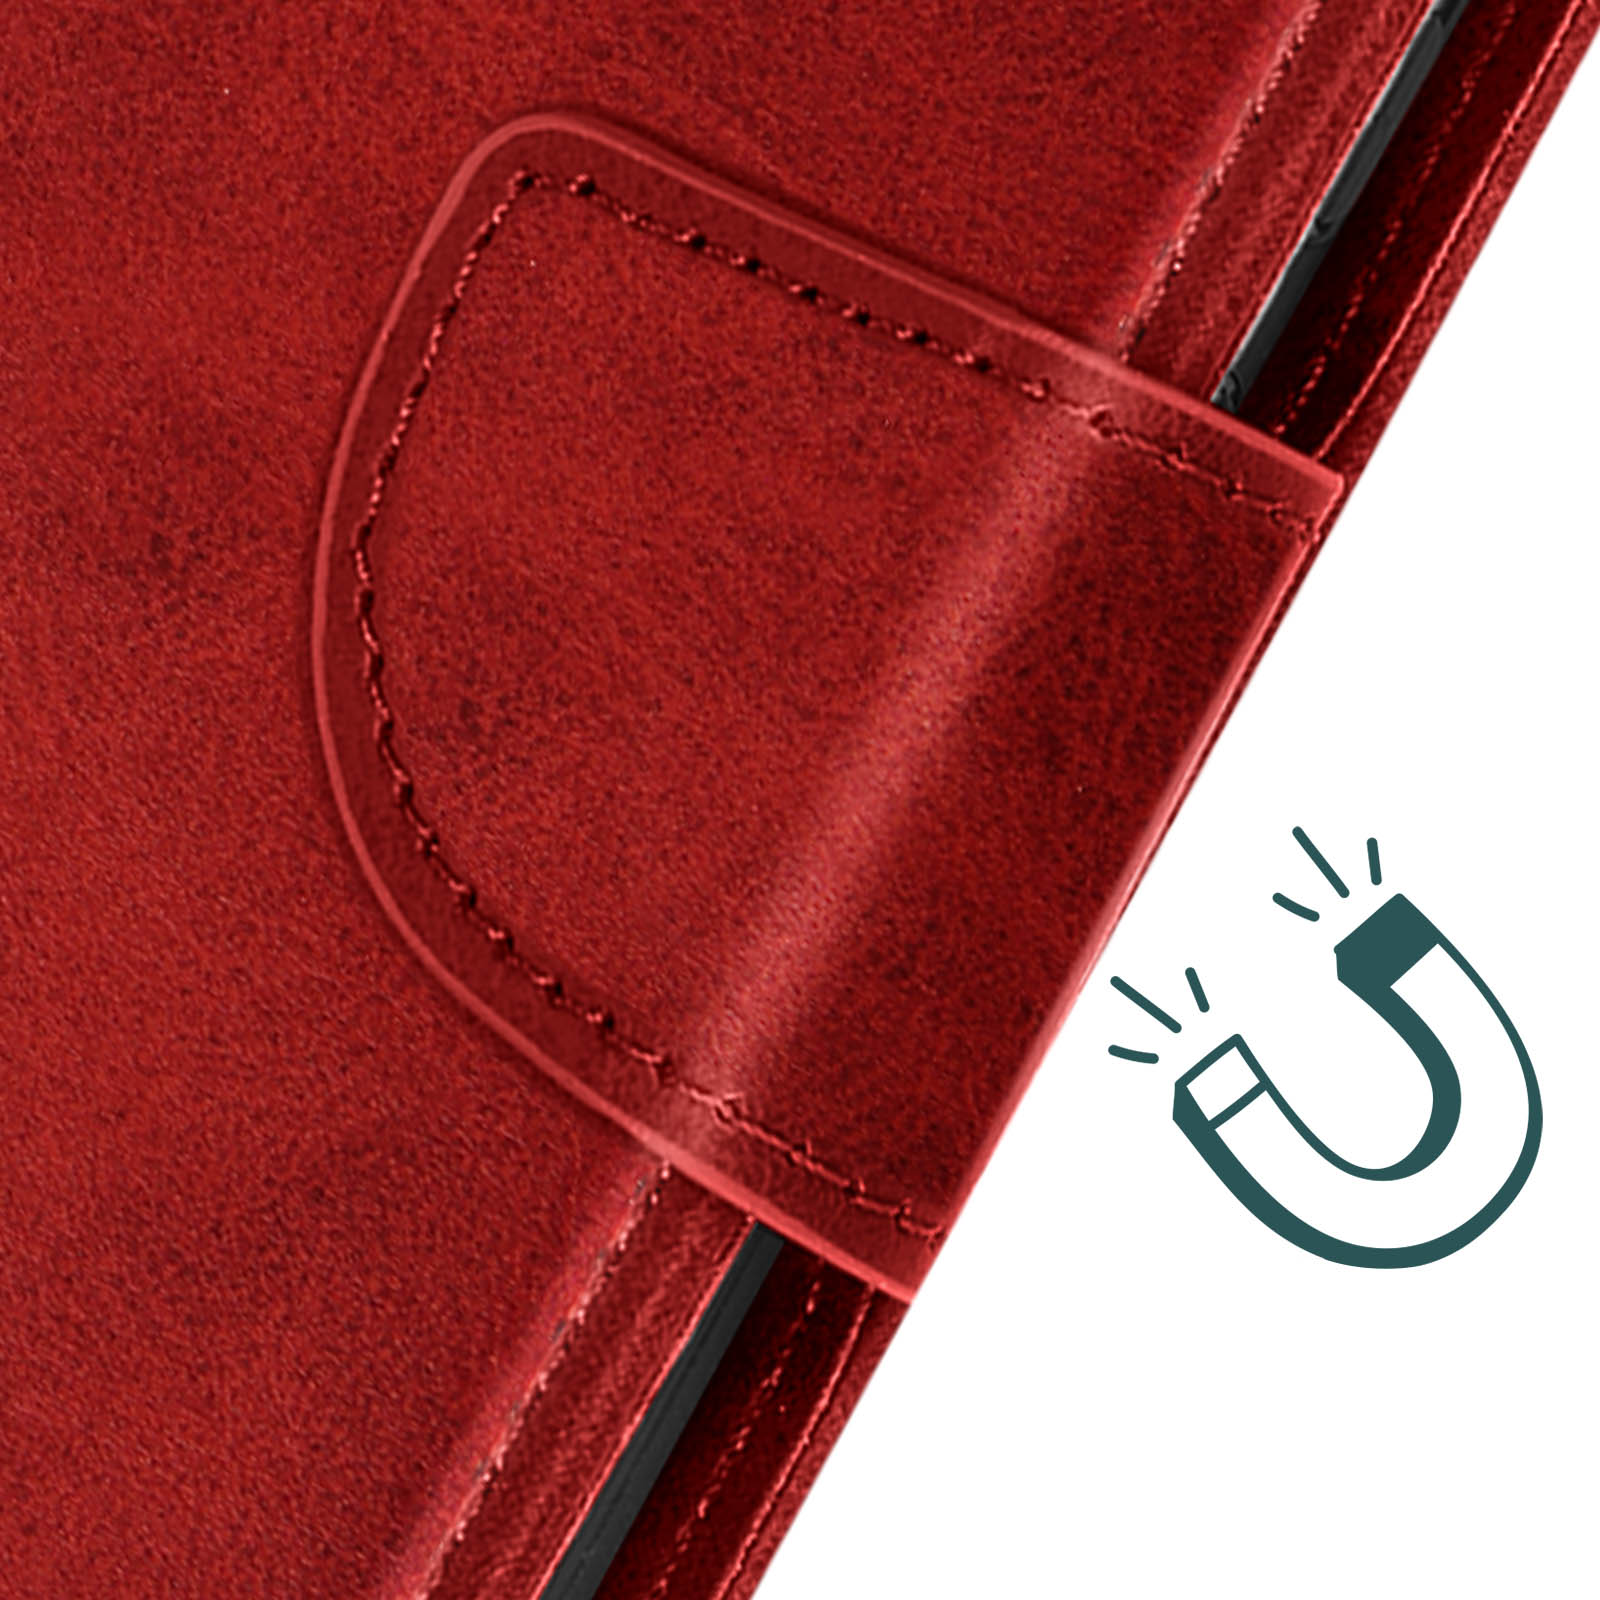 Rot Bookcover, Moto Luxus Series, E13, AVIZAR Motorola,